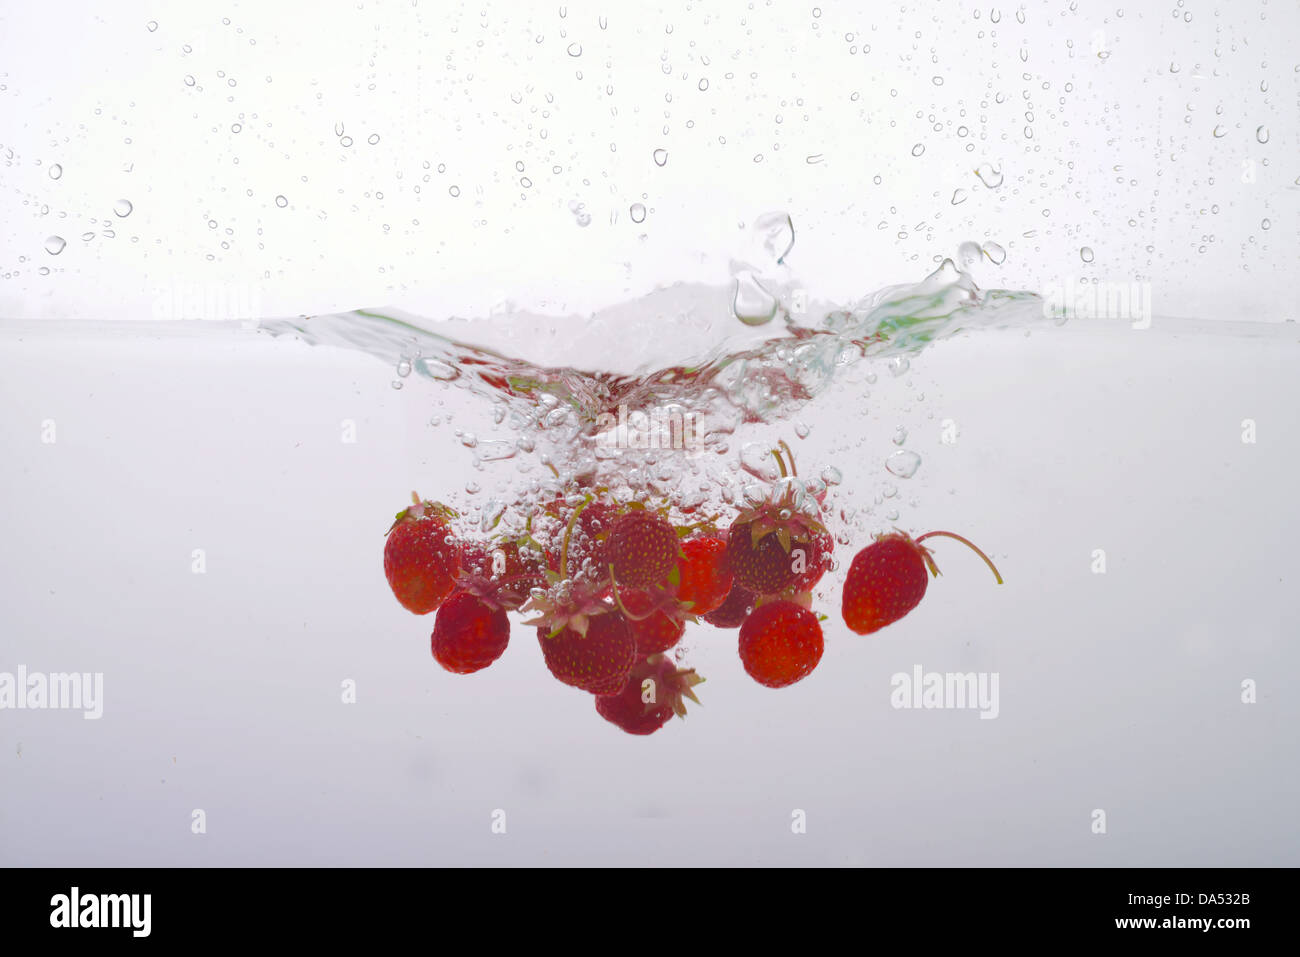 Strawberries splashed into water Stock Photo